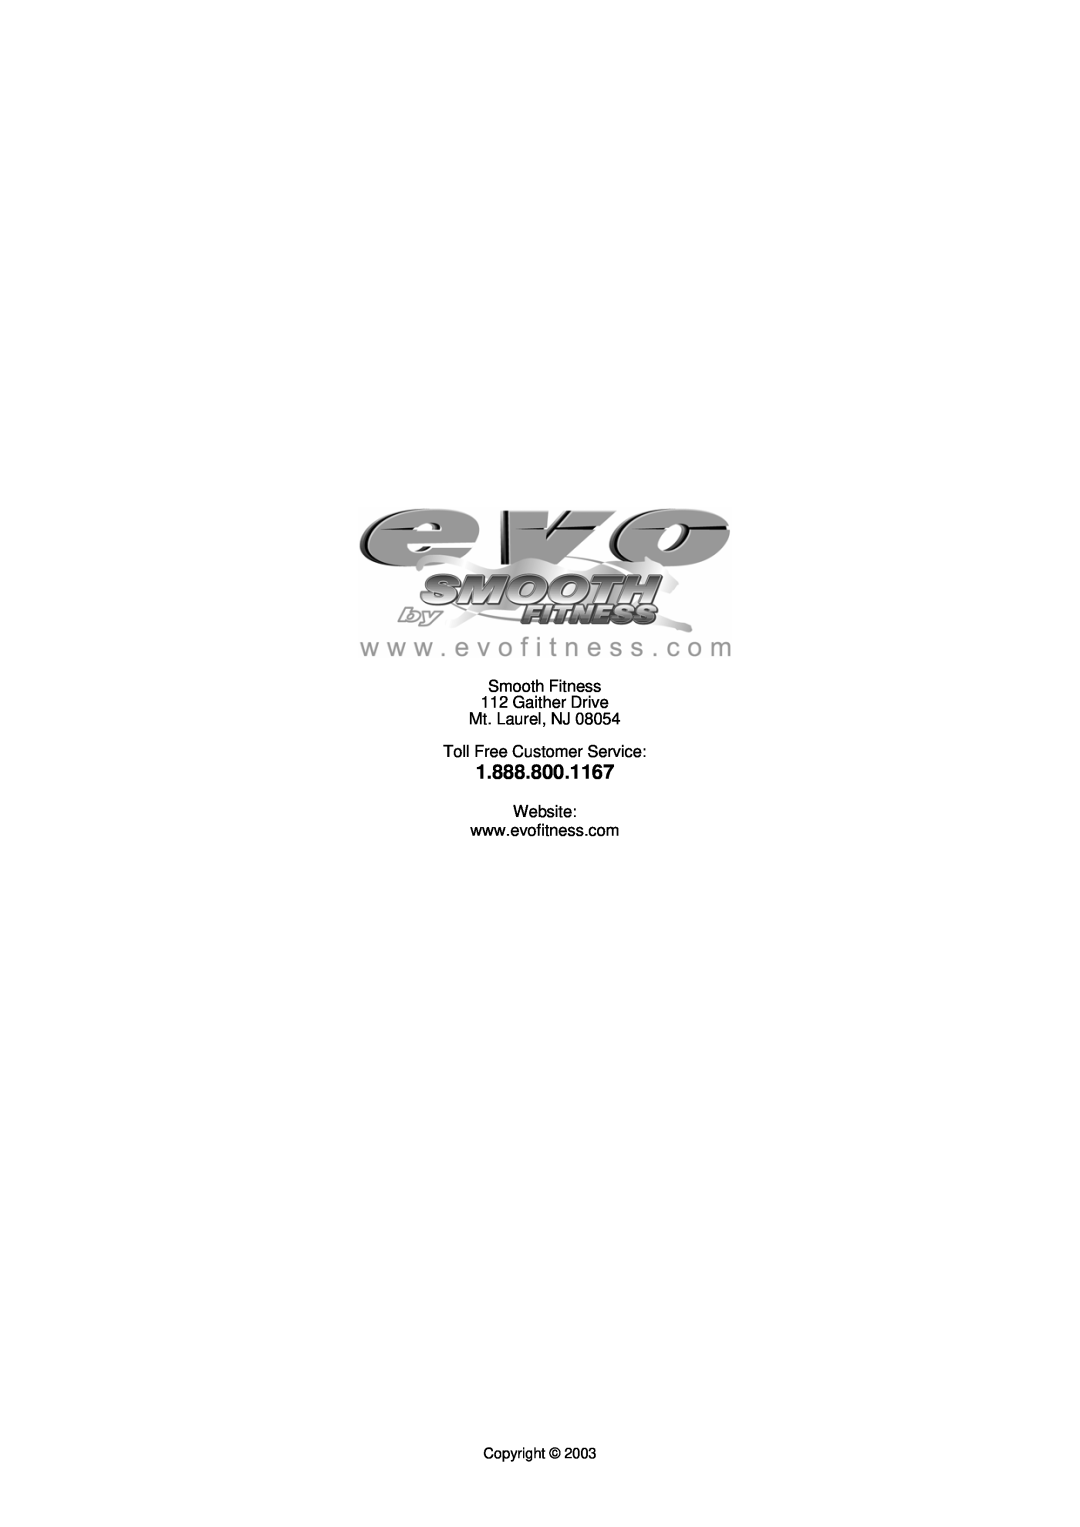 Evo Fitness EVO2 1.888.800.1167, Smooth Fitness 112 Gaither Drive Mt. Laurel, NJ, Toll Free Customer Service, Website 